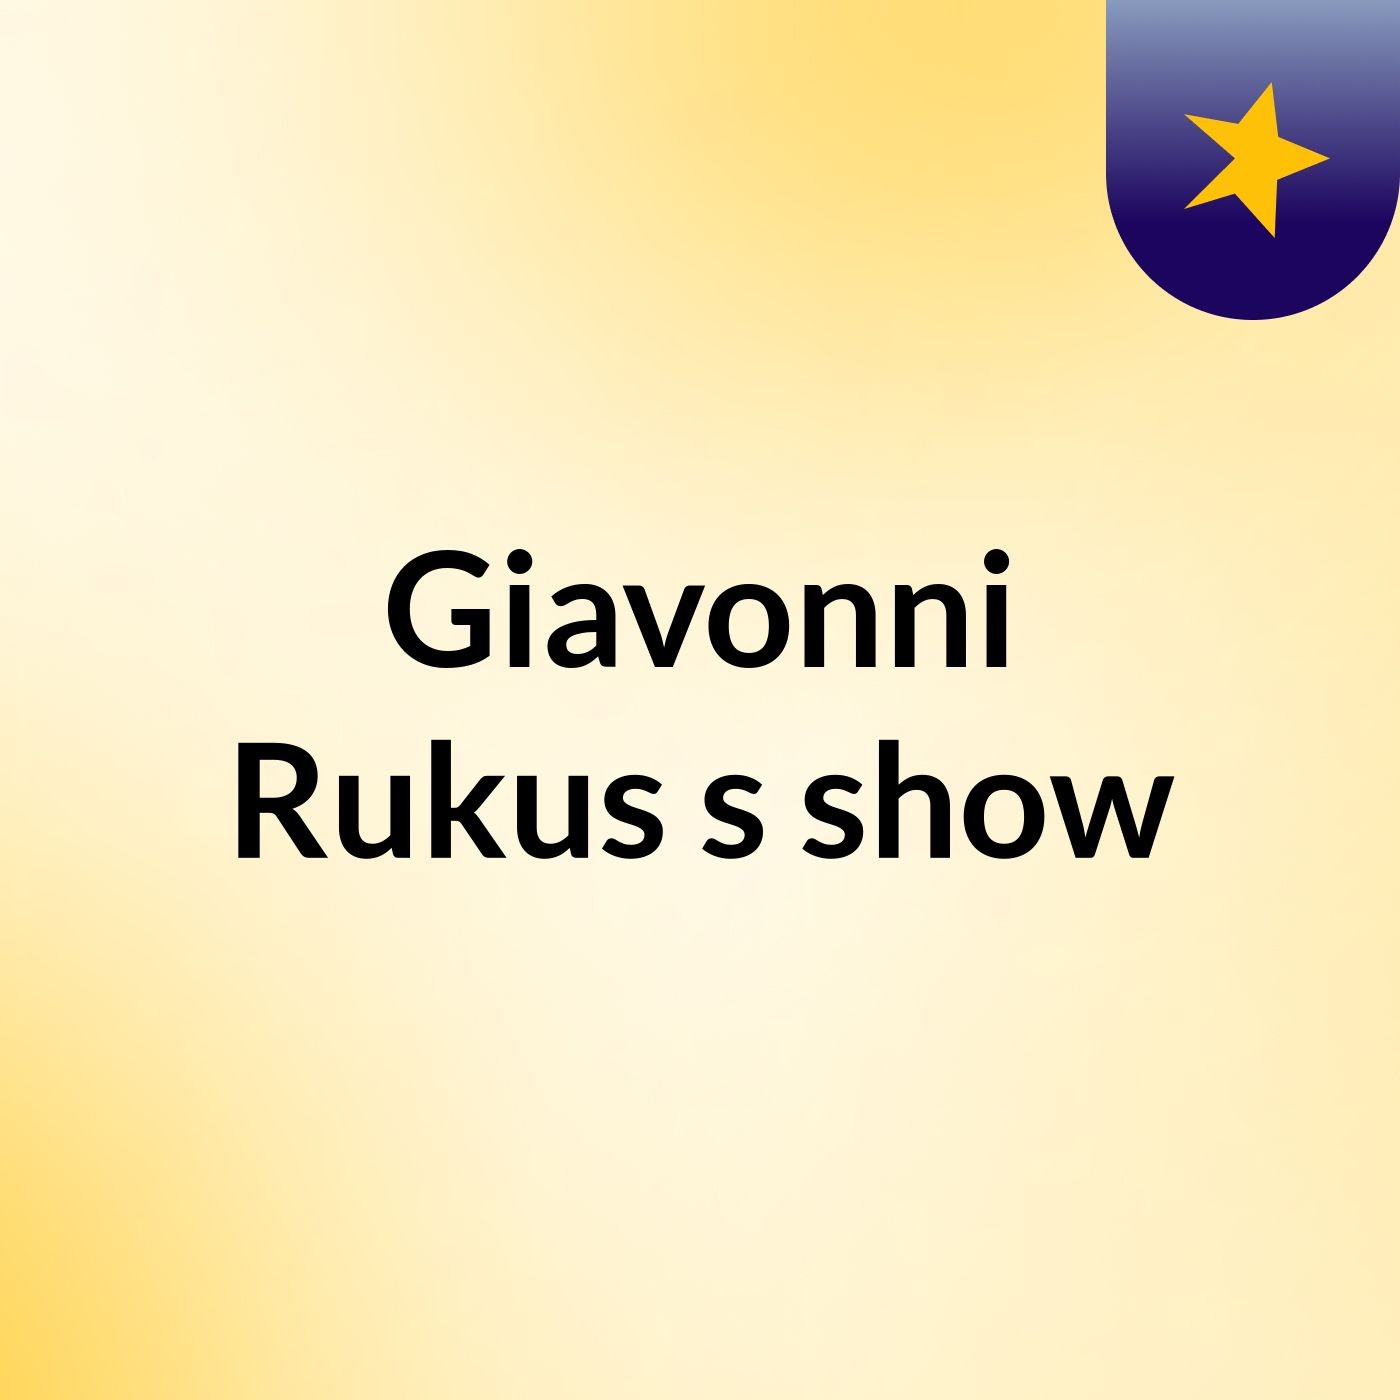 Episode 2 - Giavonni Rukus's show